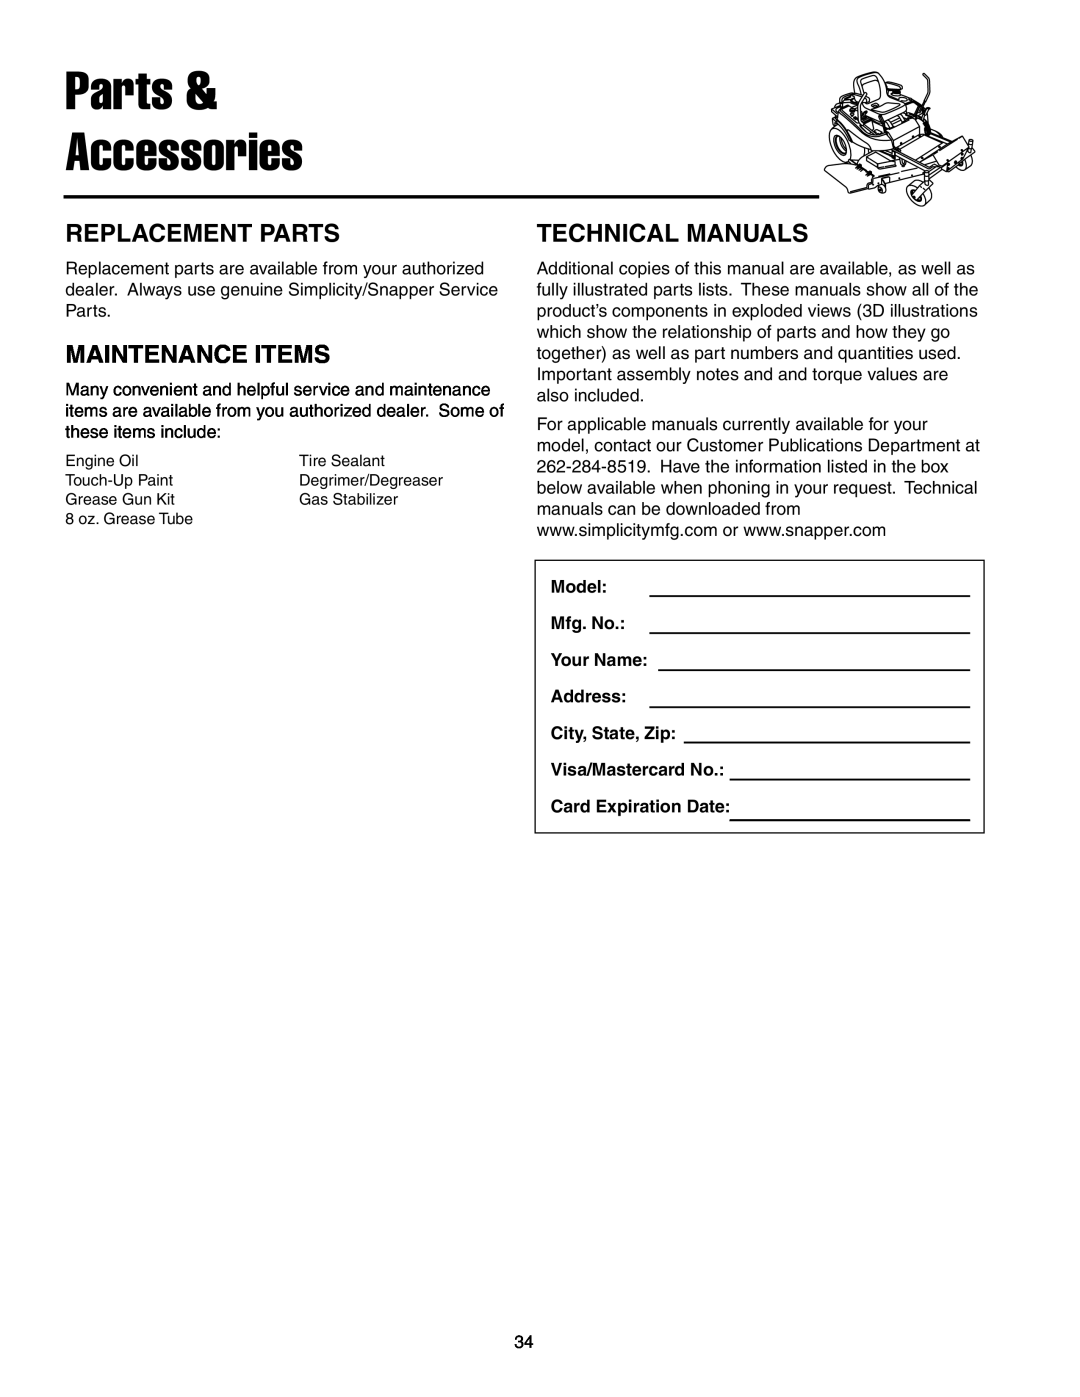 Snapper RZT20440BVE2 Replacement Parts, Maintenance Items, Technical Manuals, Card Expiration Date, Parts & Accessories 